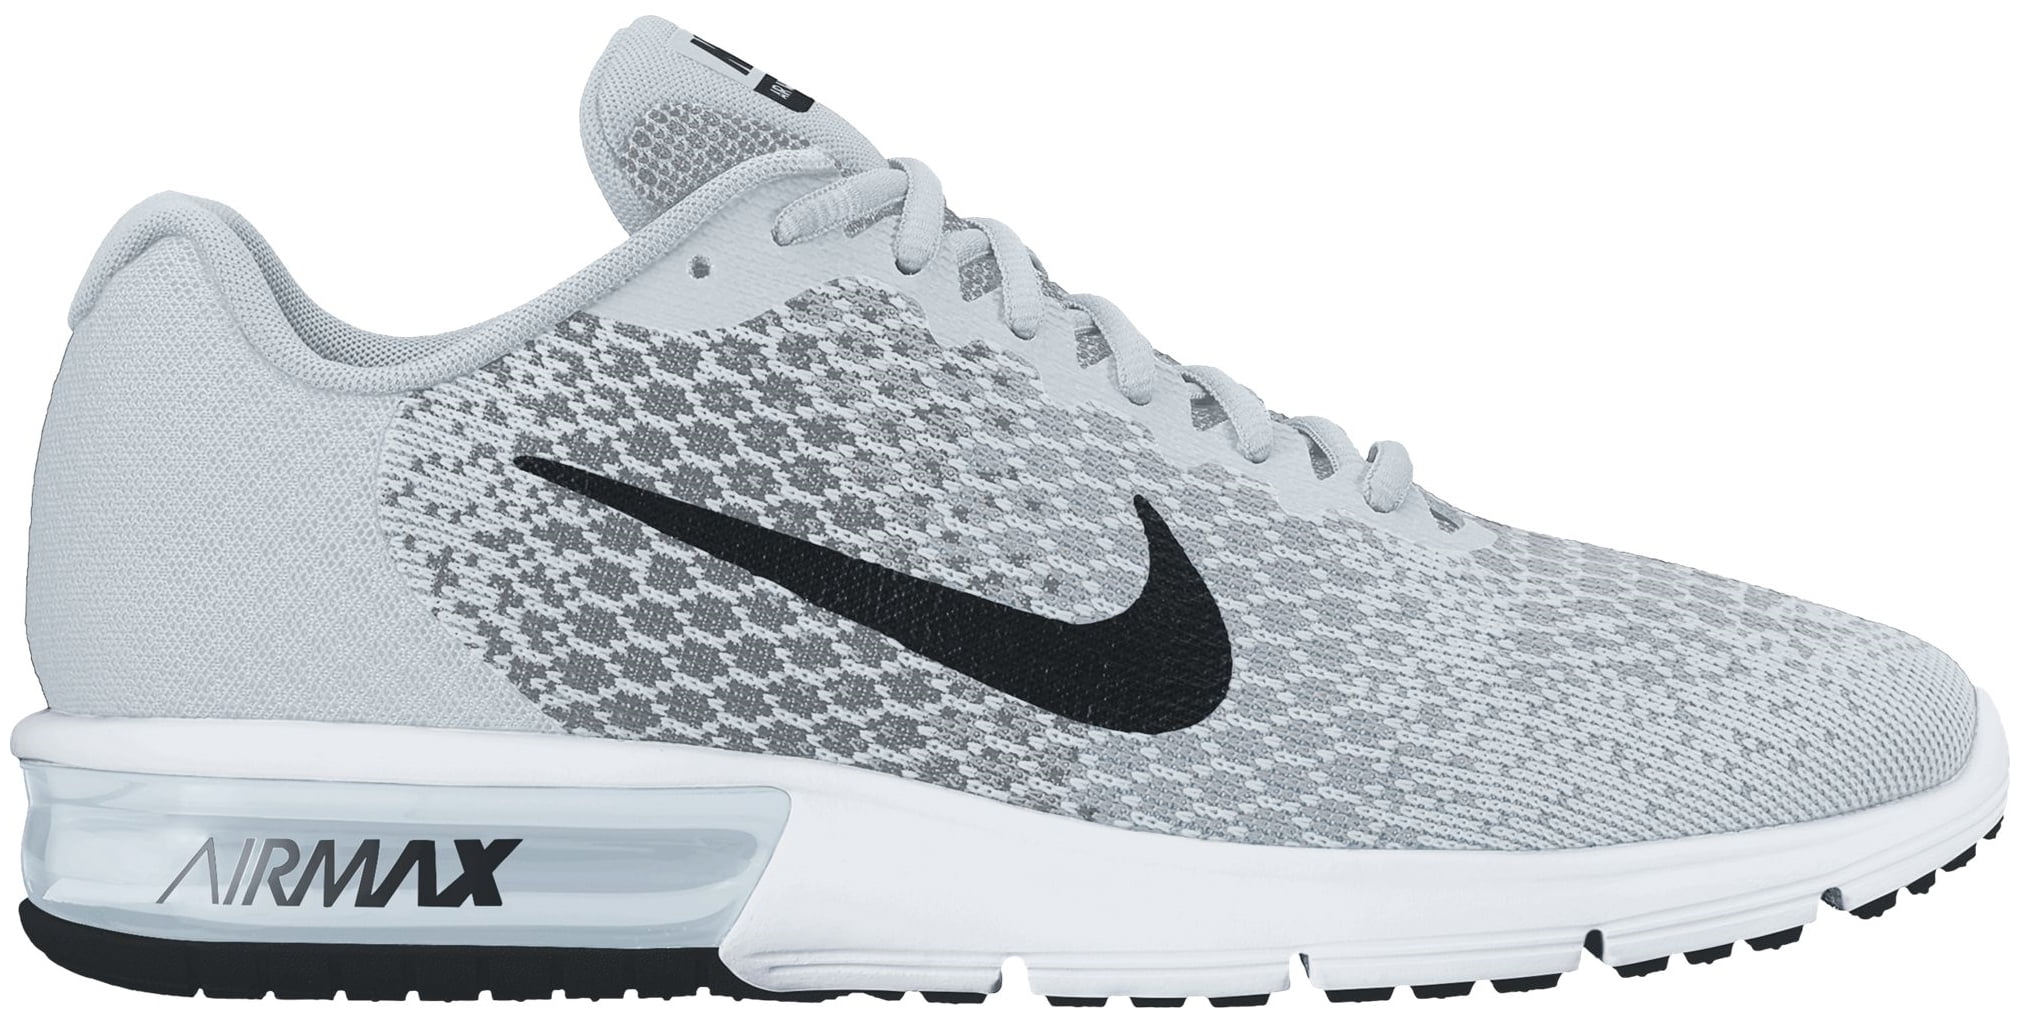 verkopen boycot Pech Nike Men's Air Max Sequent 2 Running Shoes - White/Grey - 9.5 - Walmart.com